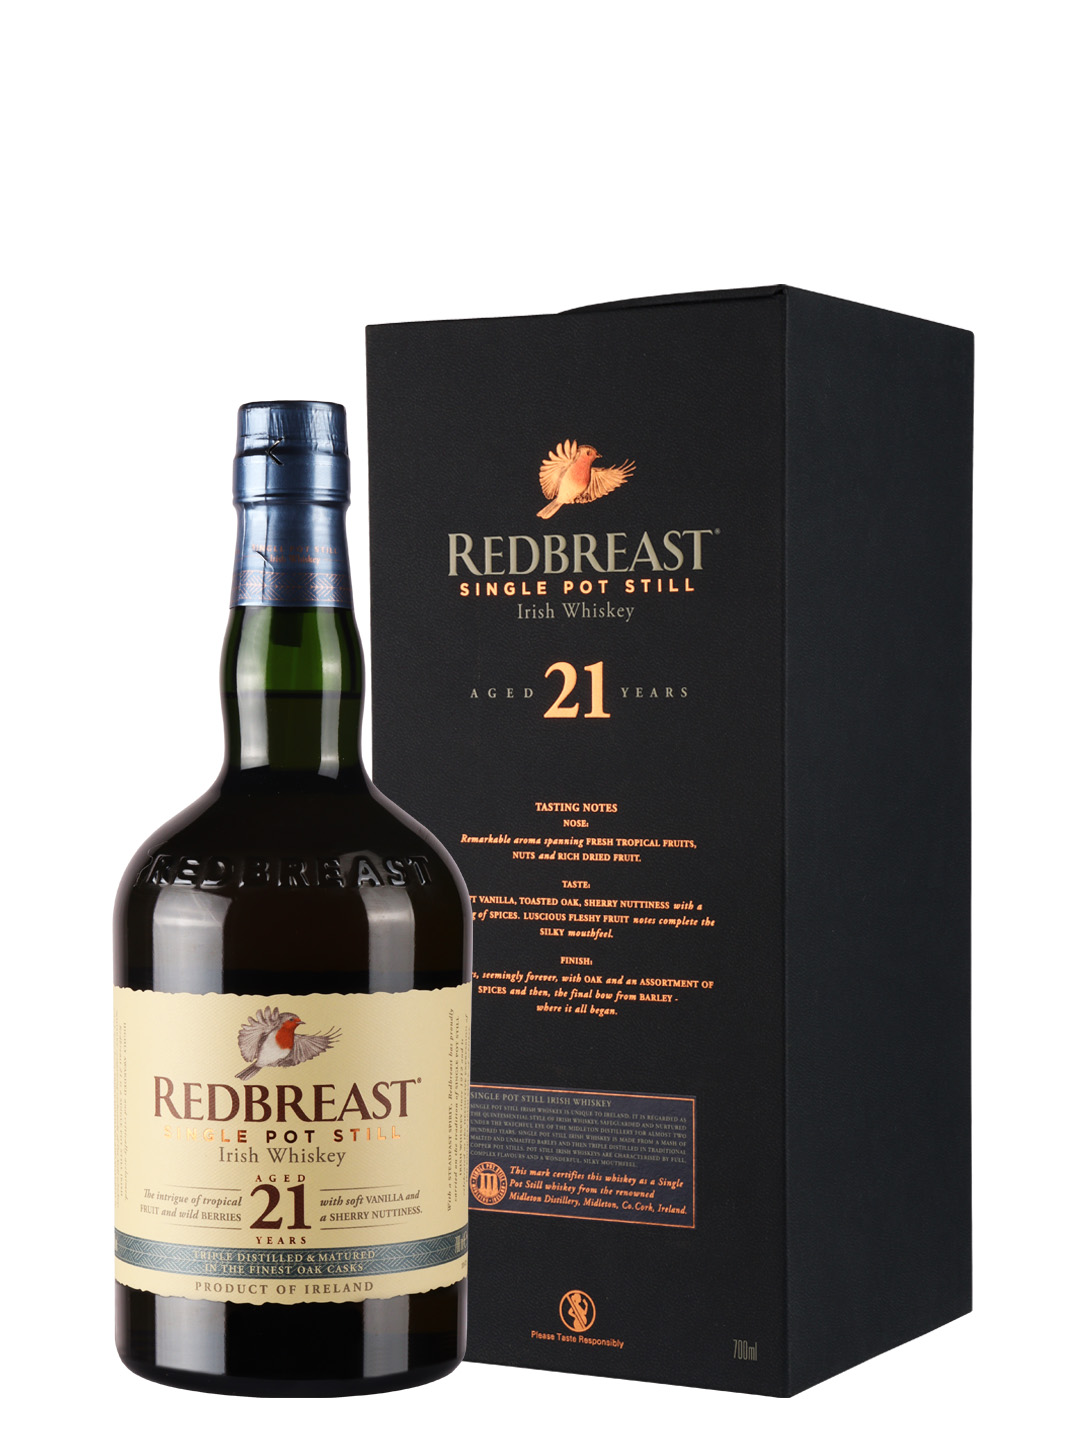 Whisky Redbreast 21YO 0,7l 